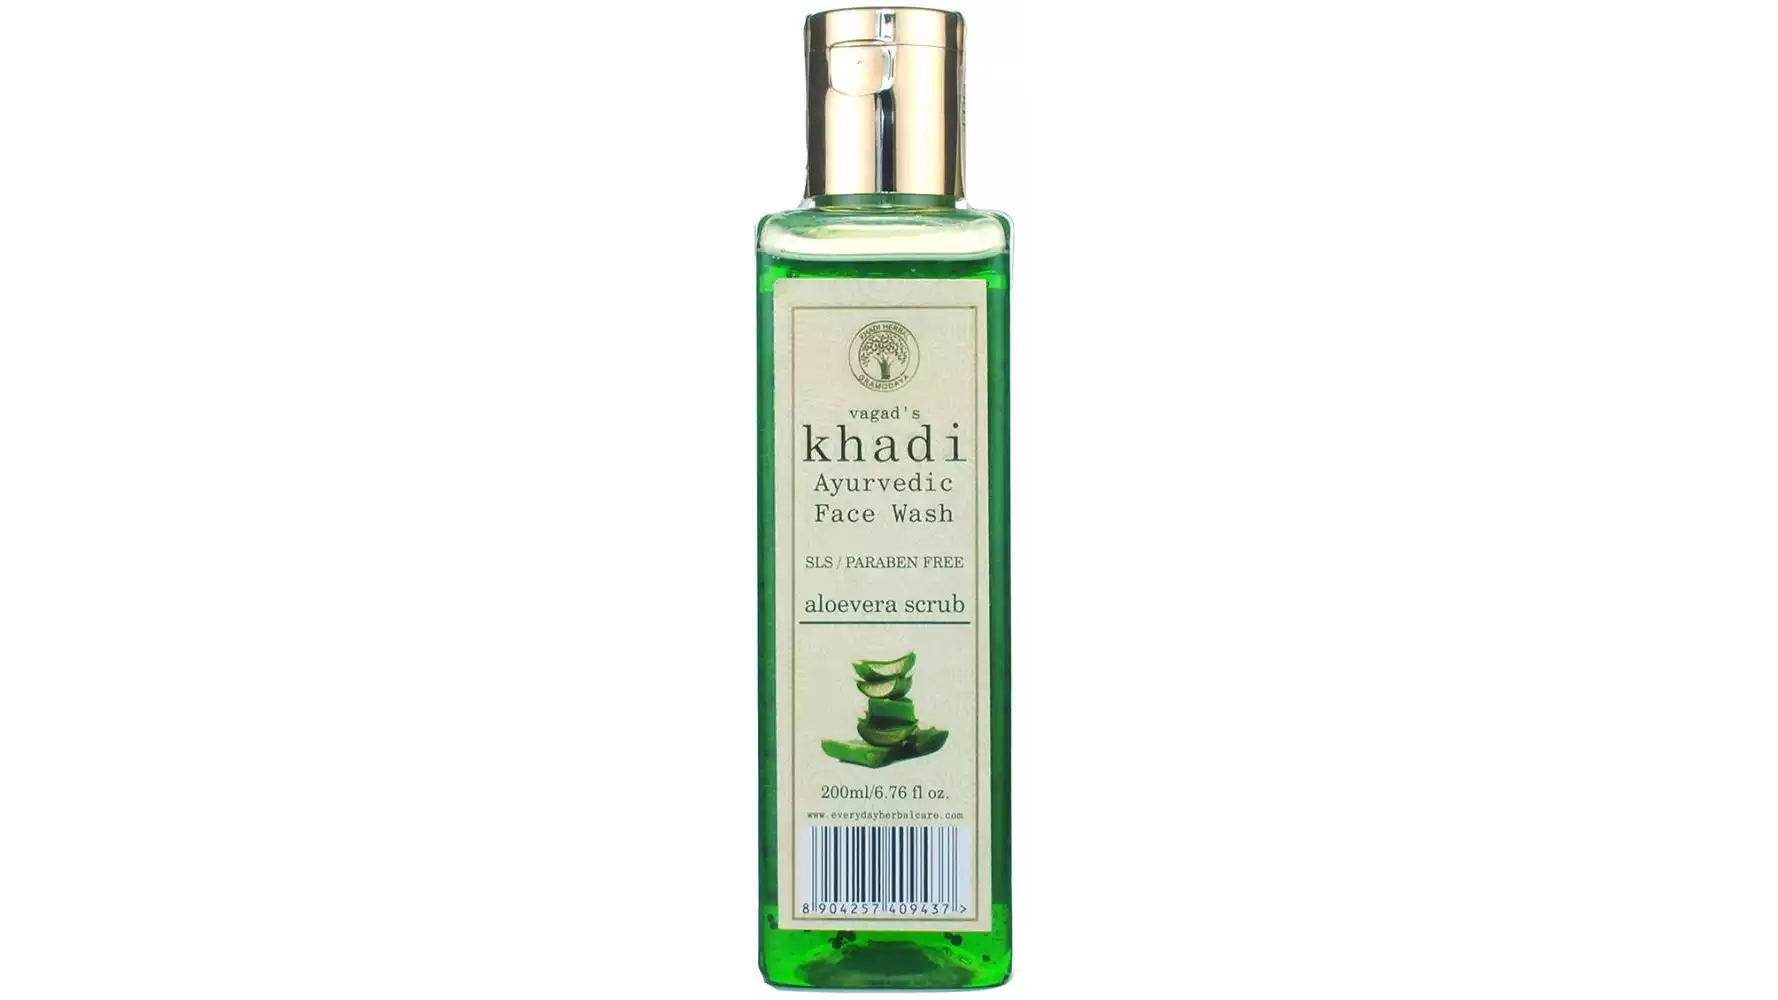 Vagads Khadi S.L.S And Paraben Free Aloevera Scrub Face Wash (200ml)